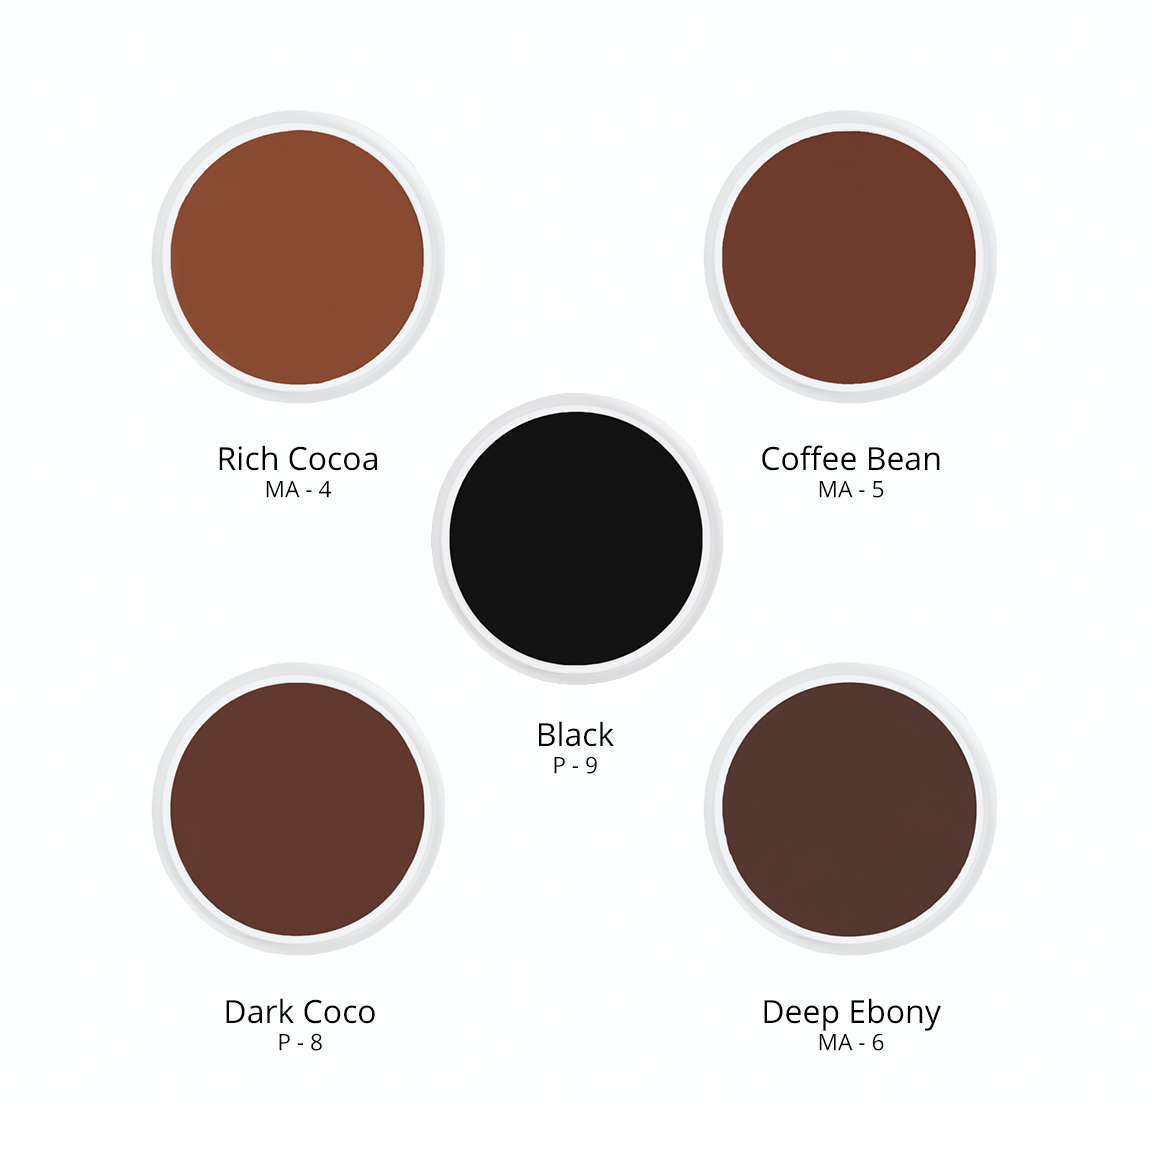 Ben Nye creme foundation in 4 shades: Rich Cocoa MA -4, Coffee Bean MA - 5, Black P - 9, Dark Coco P - 8, and Deep Ebony MA - 6.